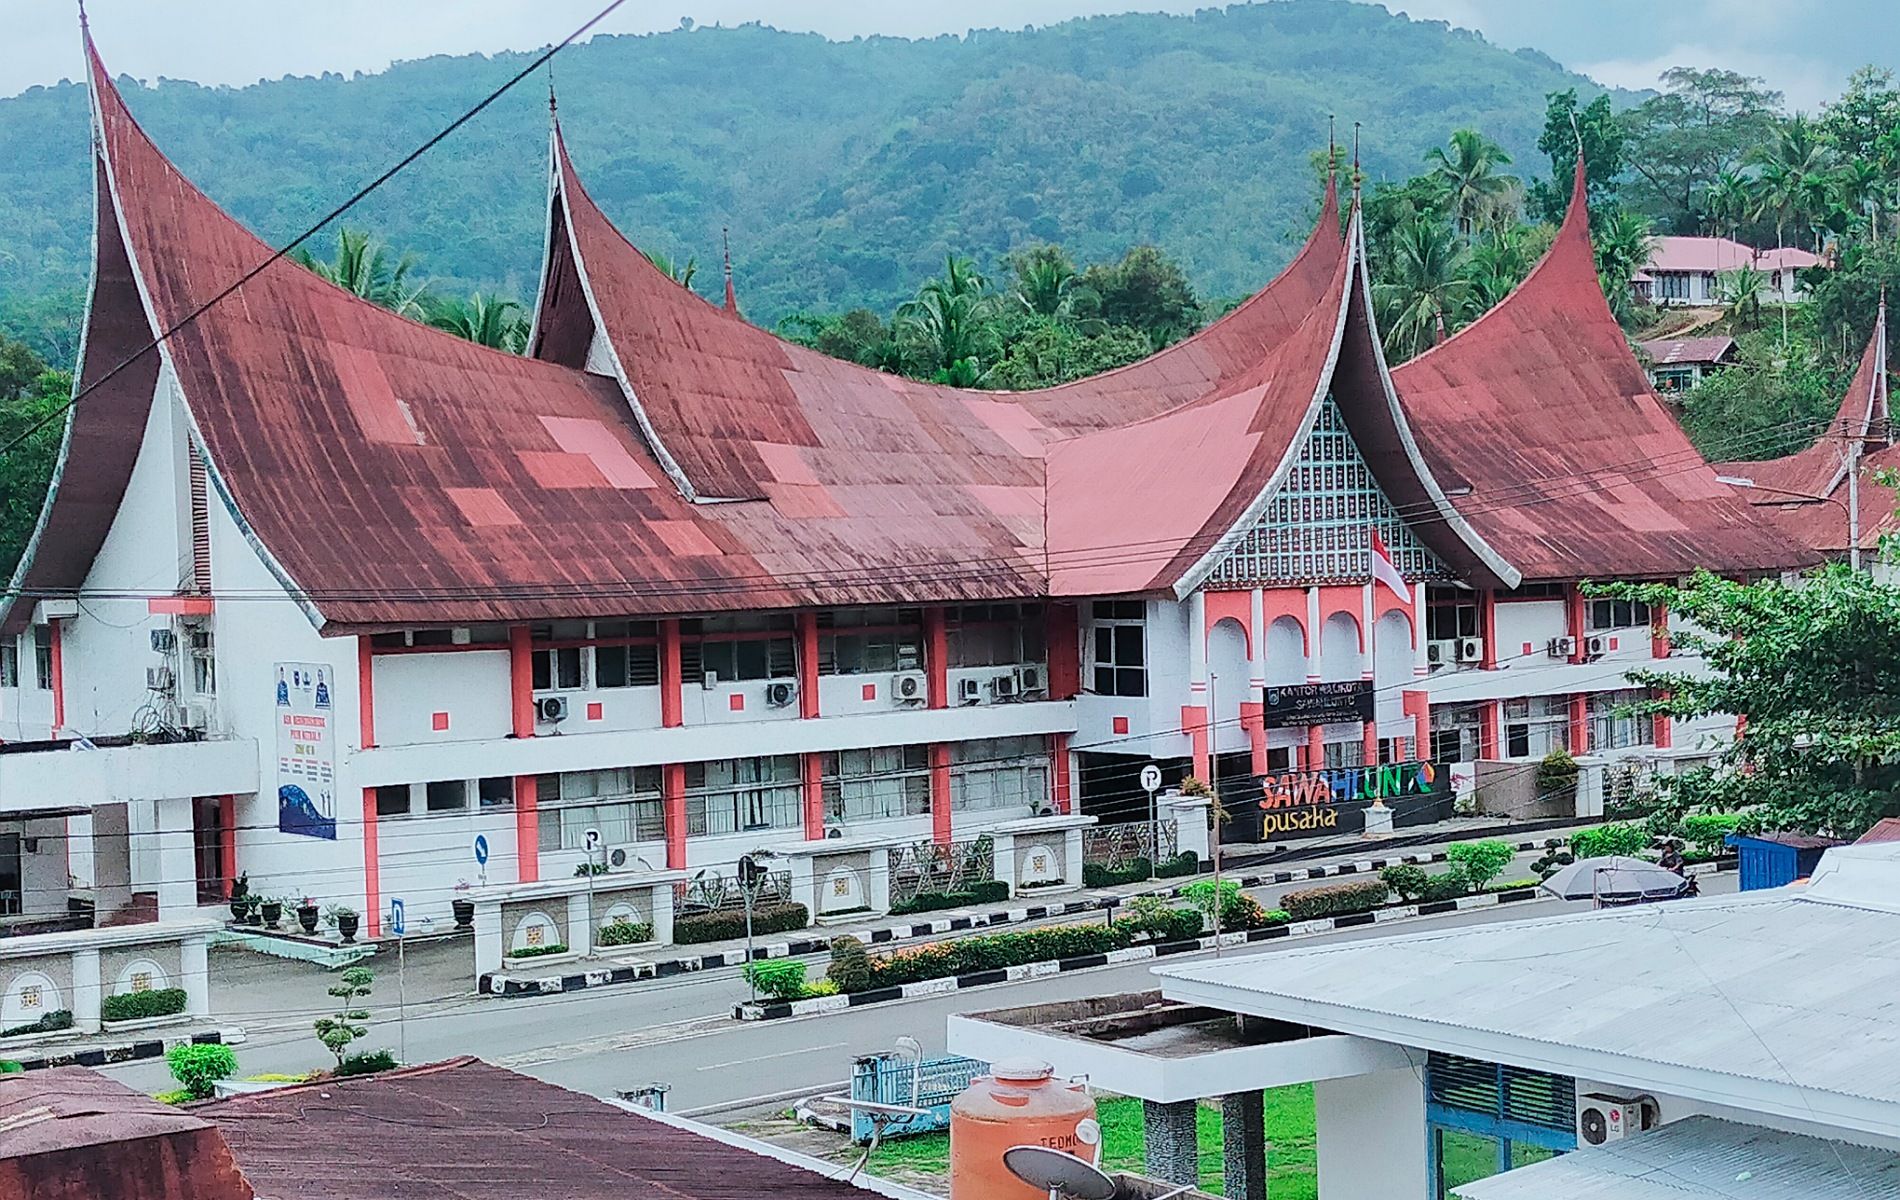 Kantor Balai Kota Sawahlunto, Sumatera Barat